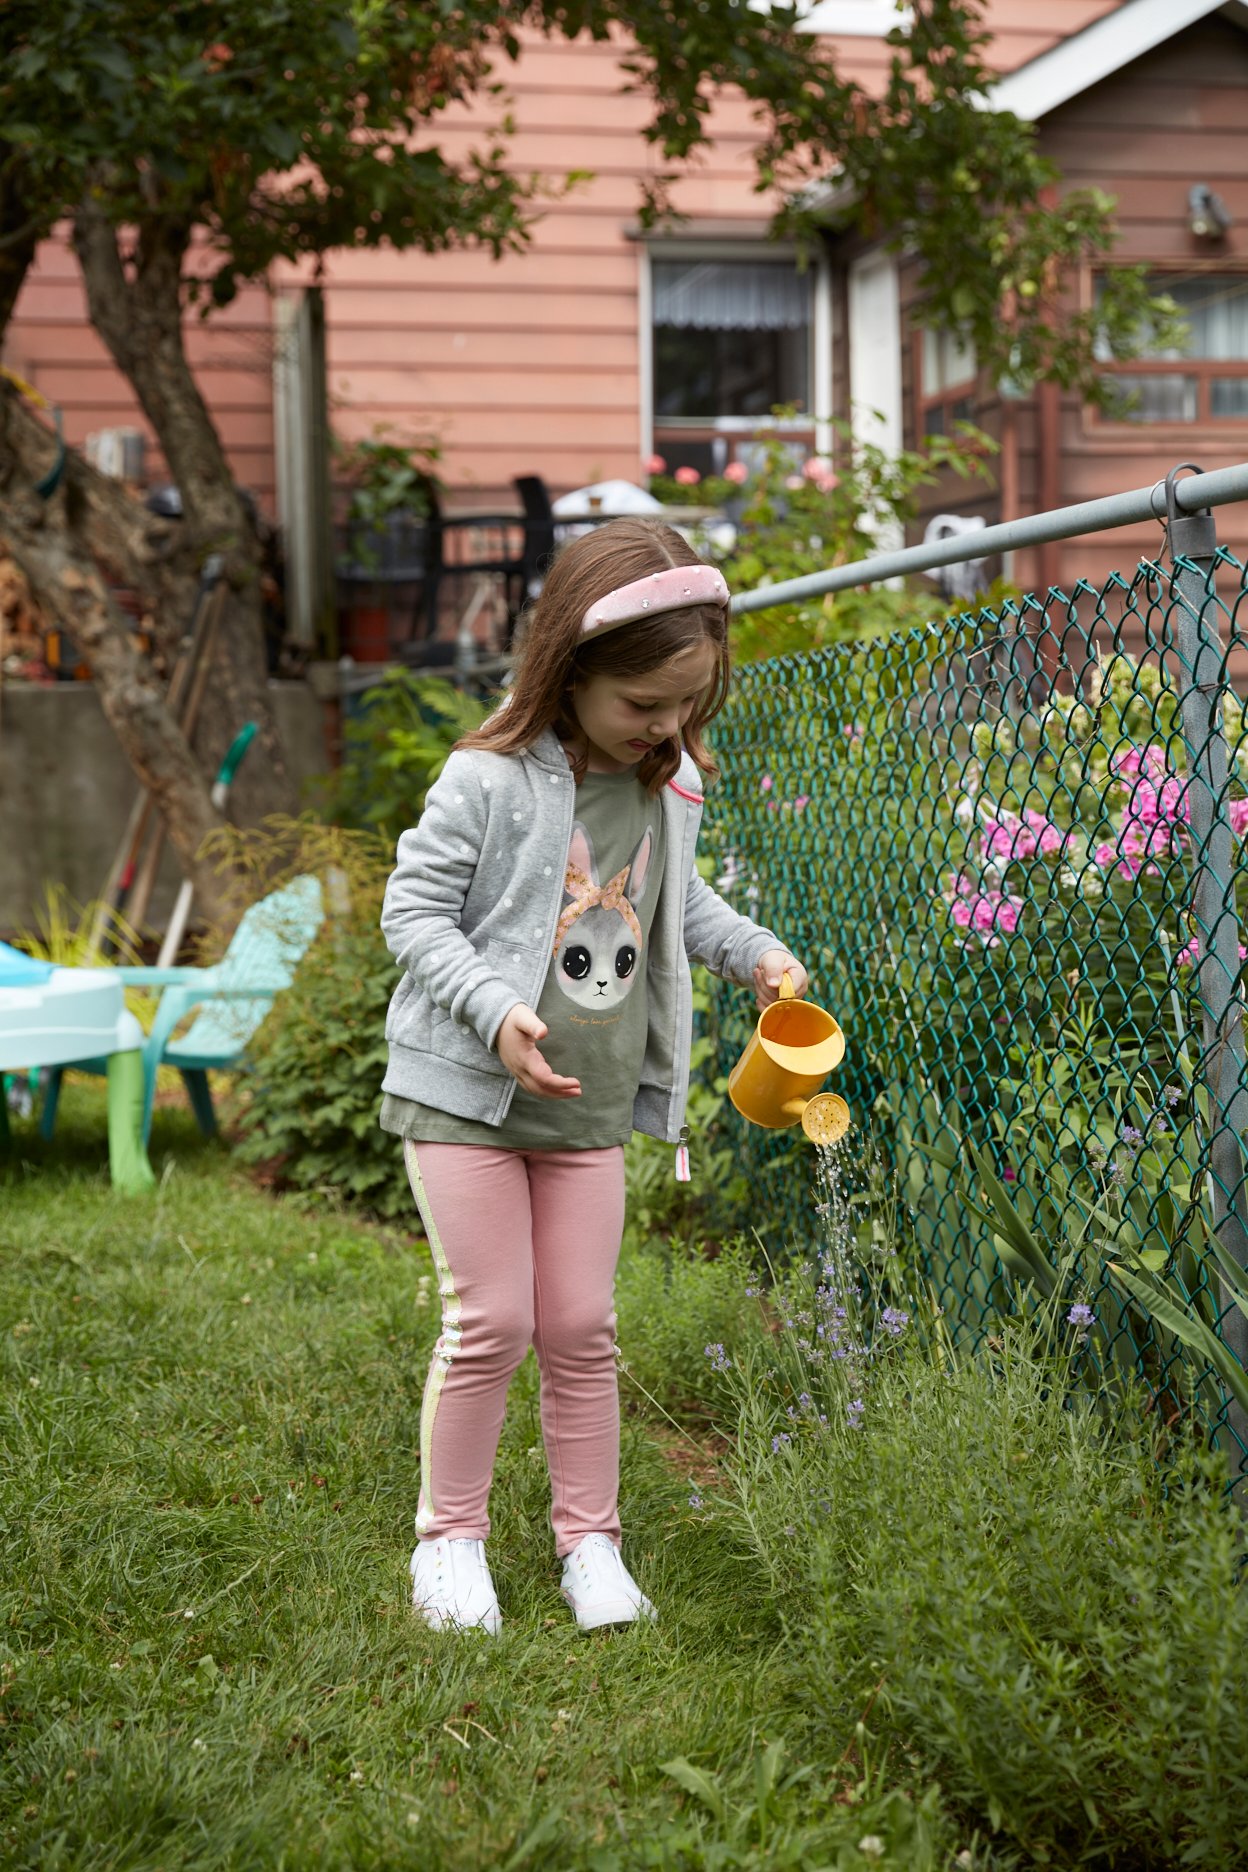 Young girl wearing pink leggings and a hoodie watering plants in backyard